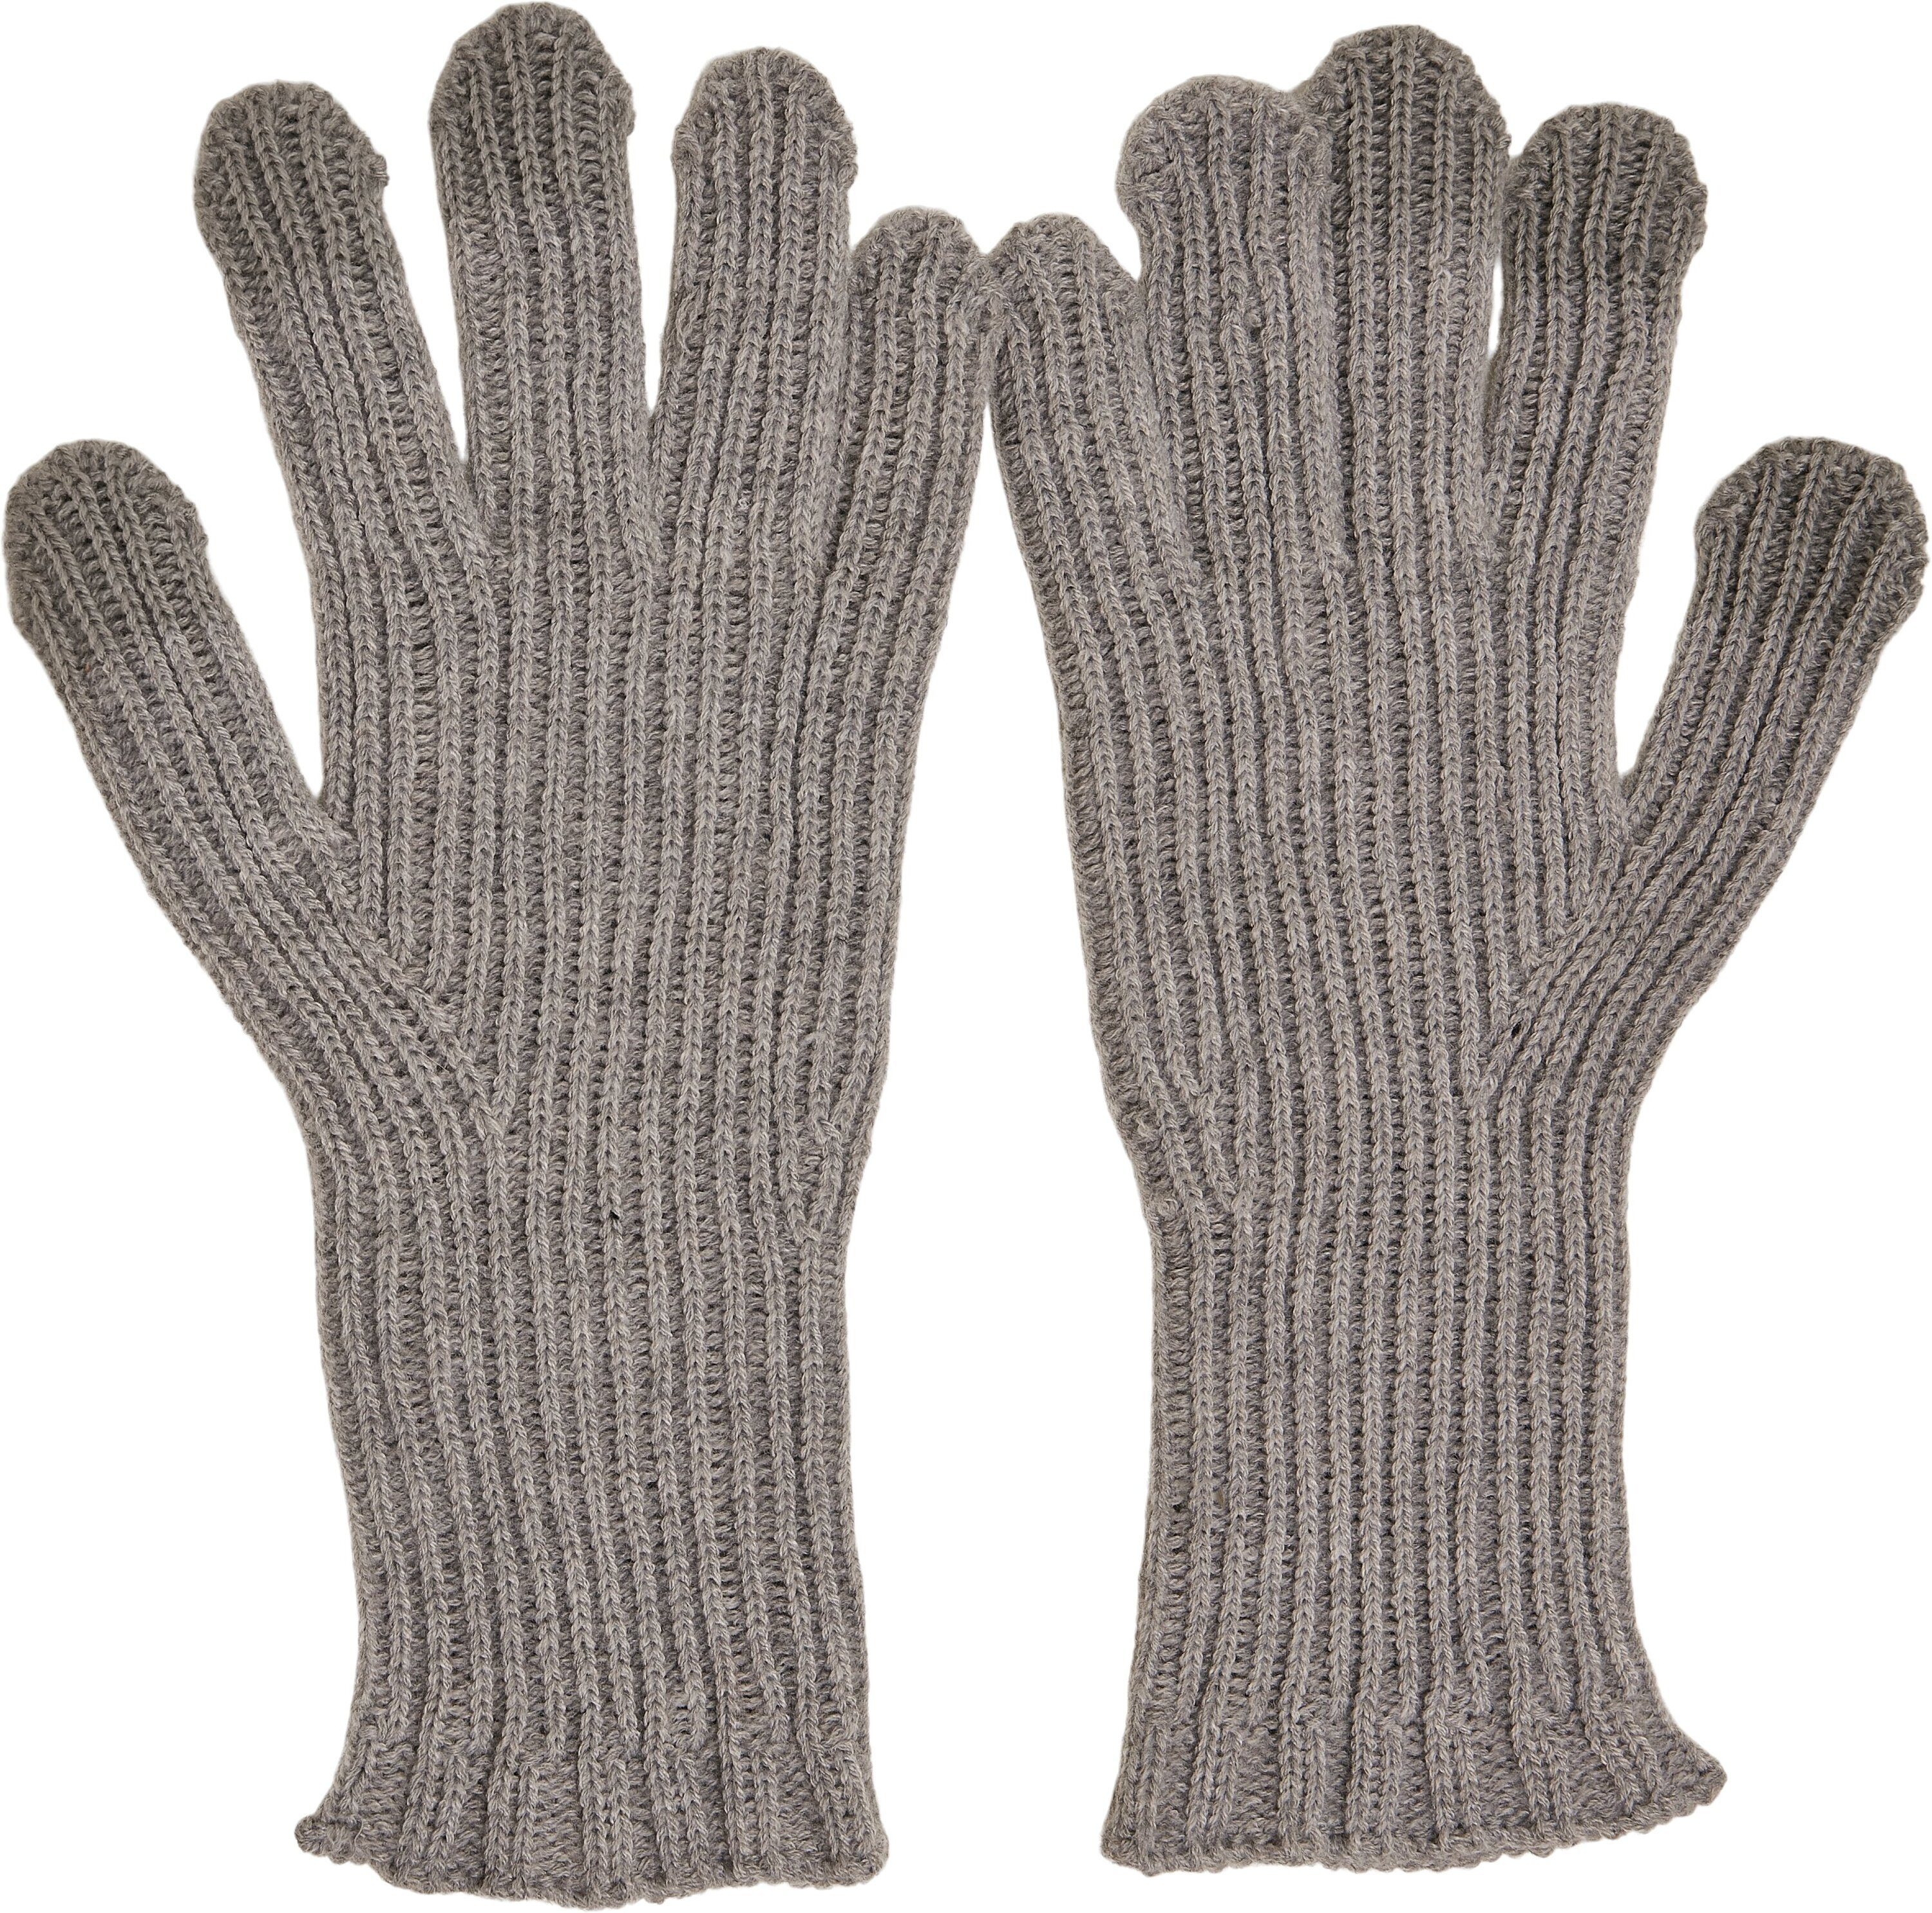 Mix Knitted CLASSICS Smart URBAN Gloves heathergrey Unisex Baumwollhandschuhe Wool